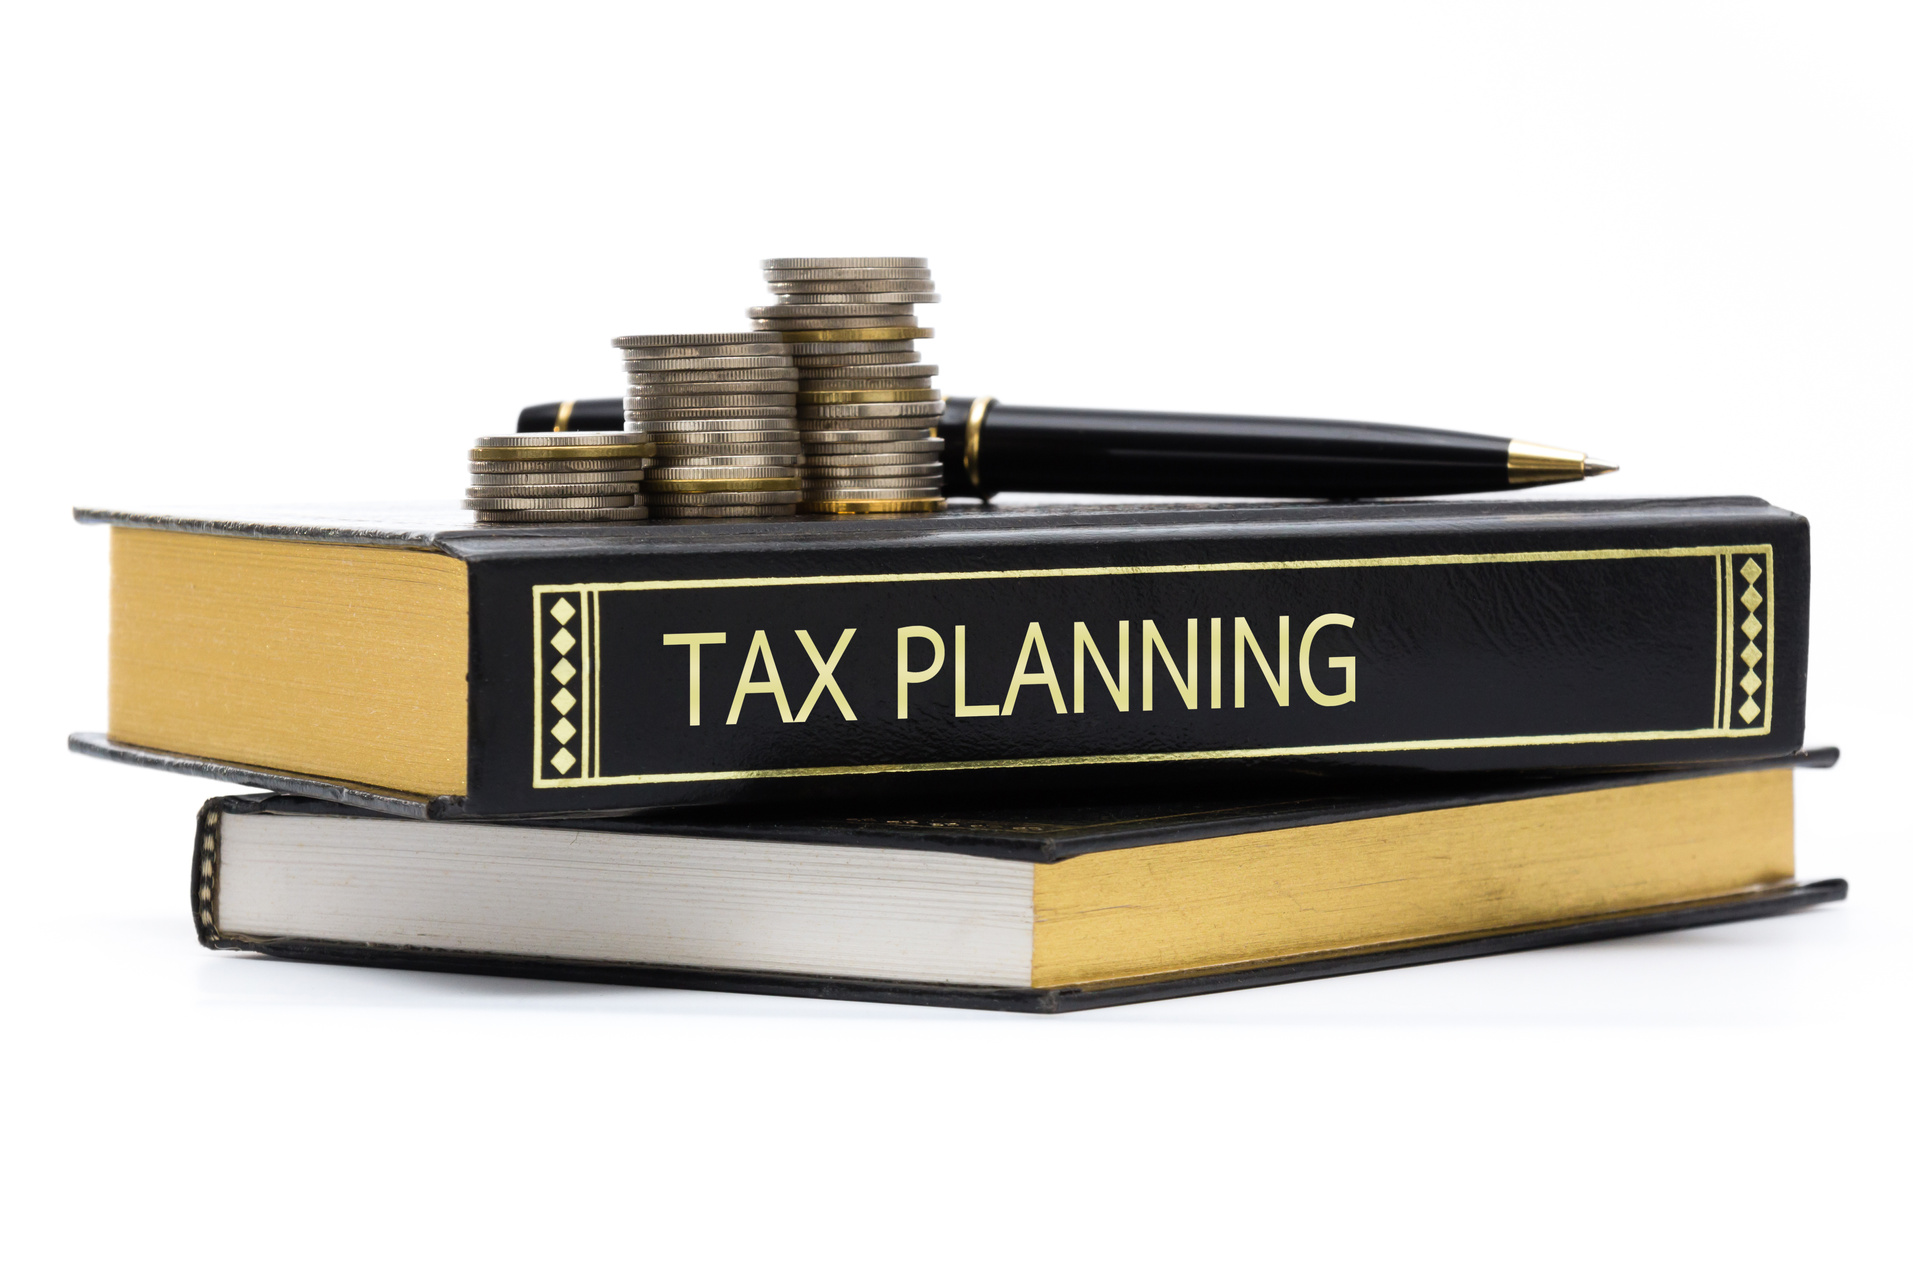 Tax planning book